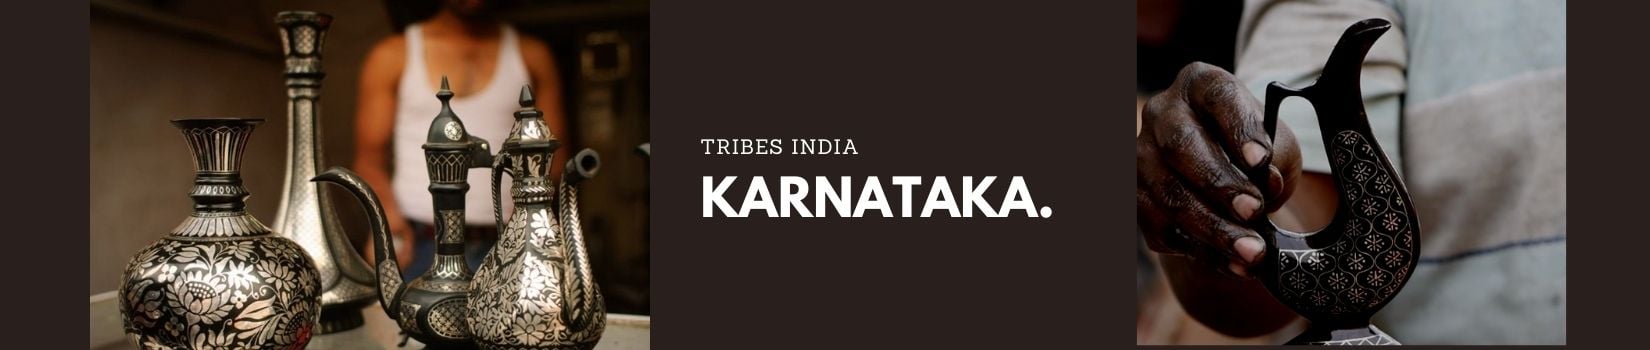 Tribes India Karnataka